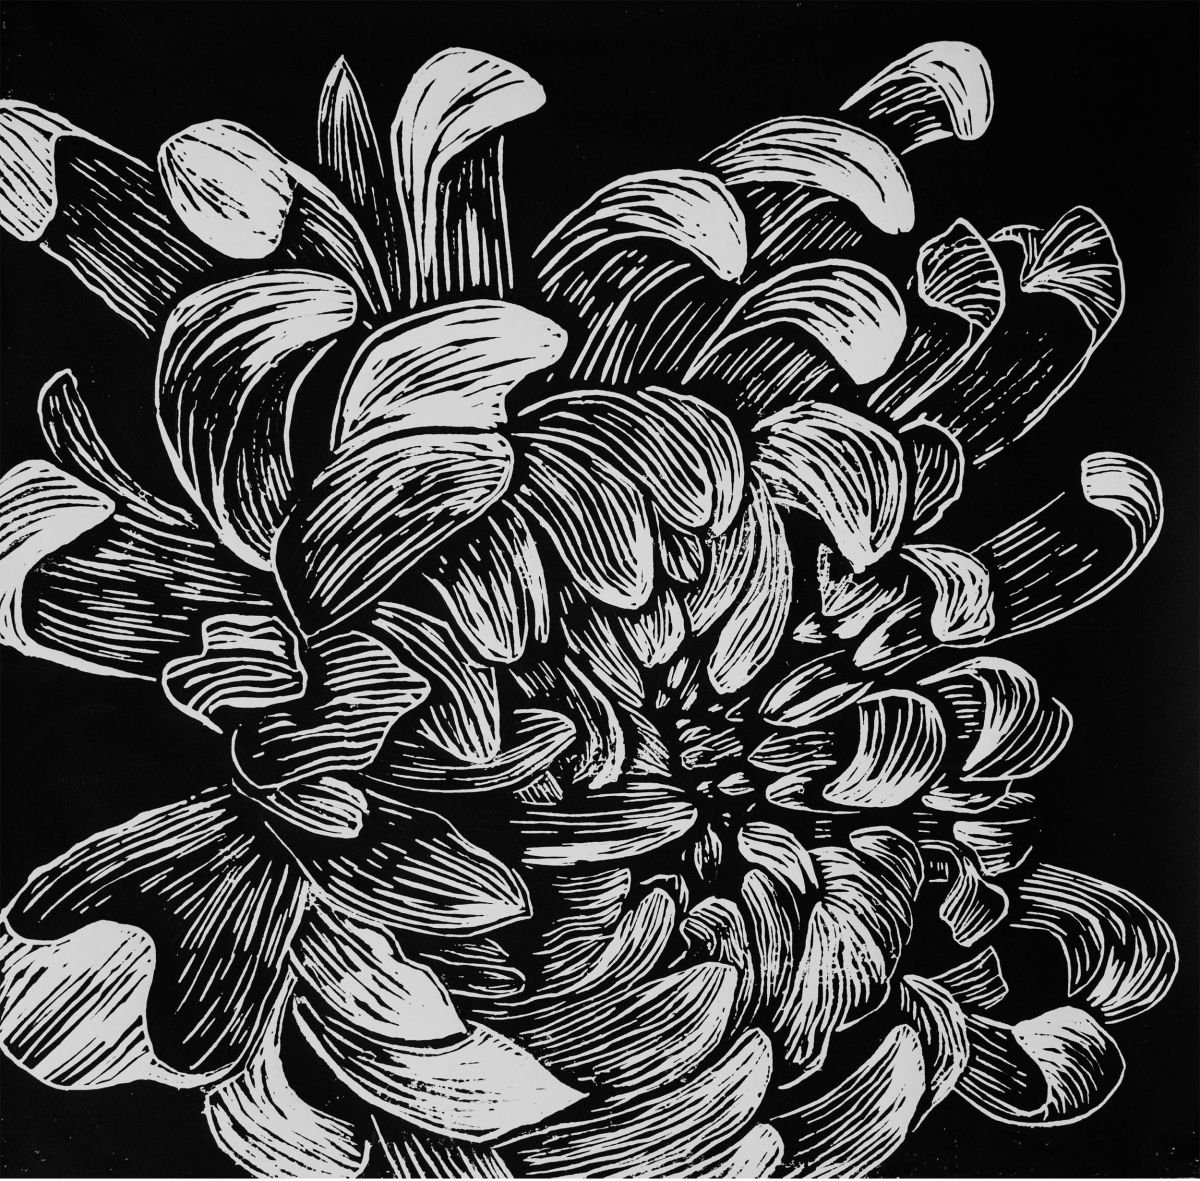 Black chrysanthemum 6x9 linocut print